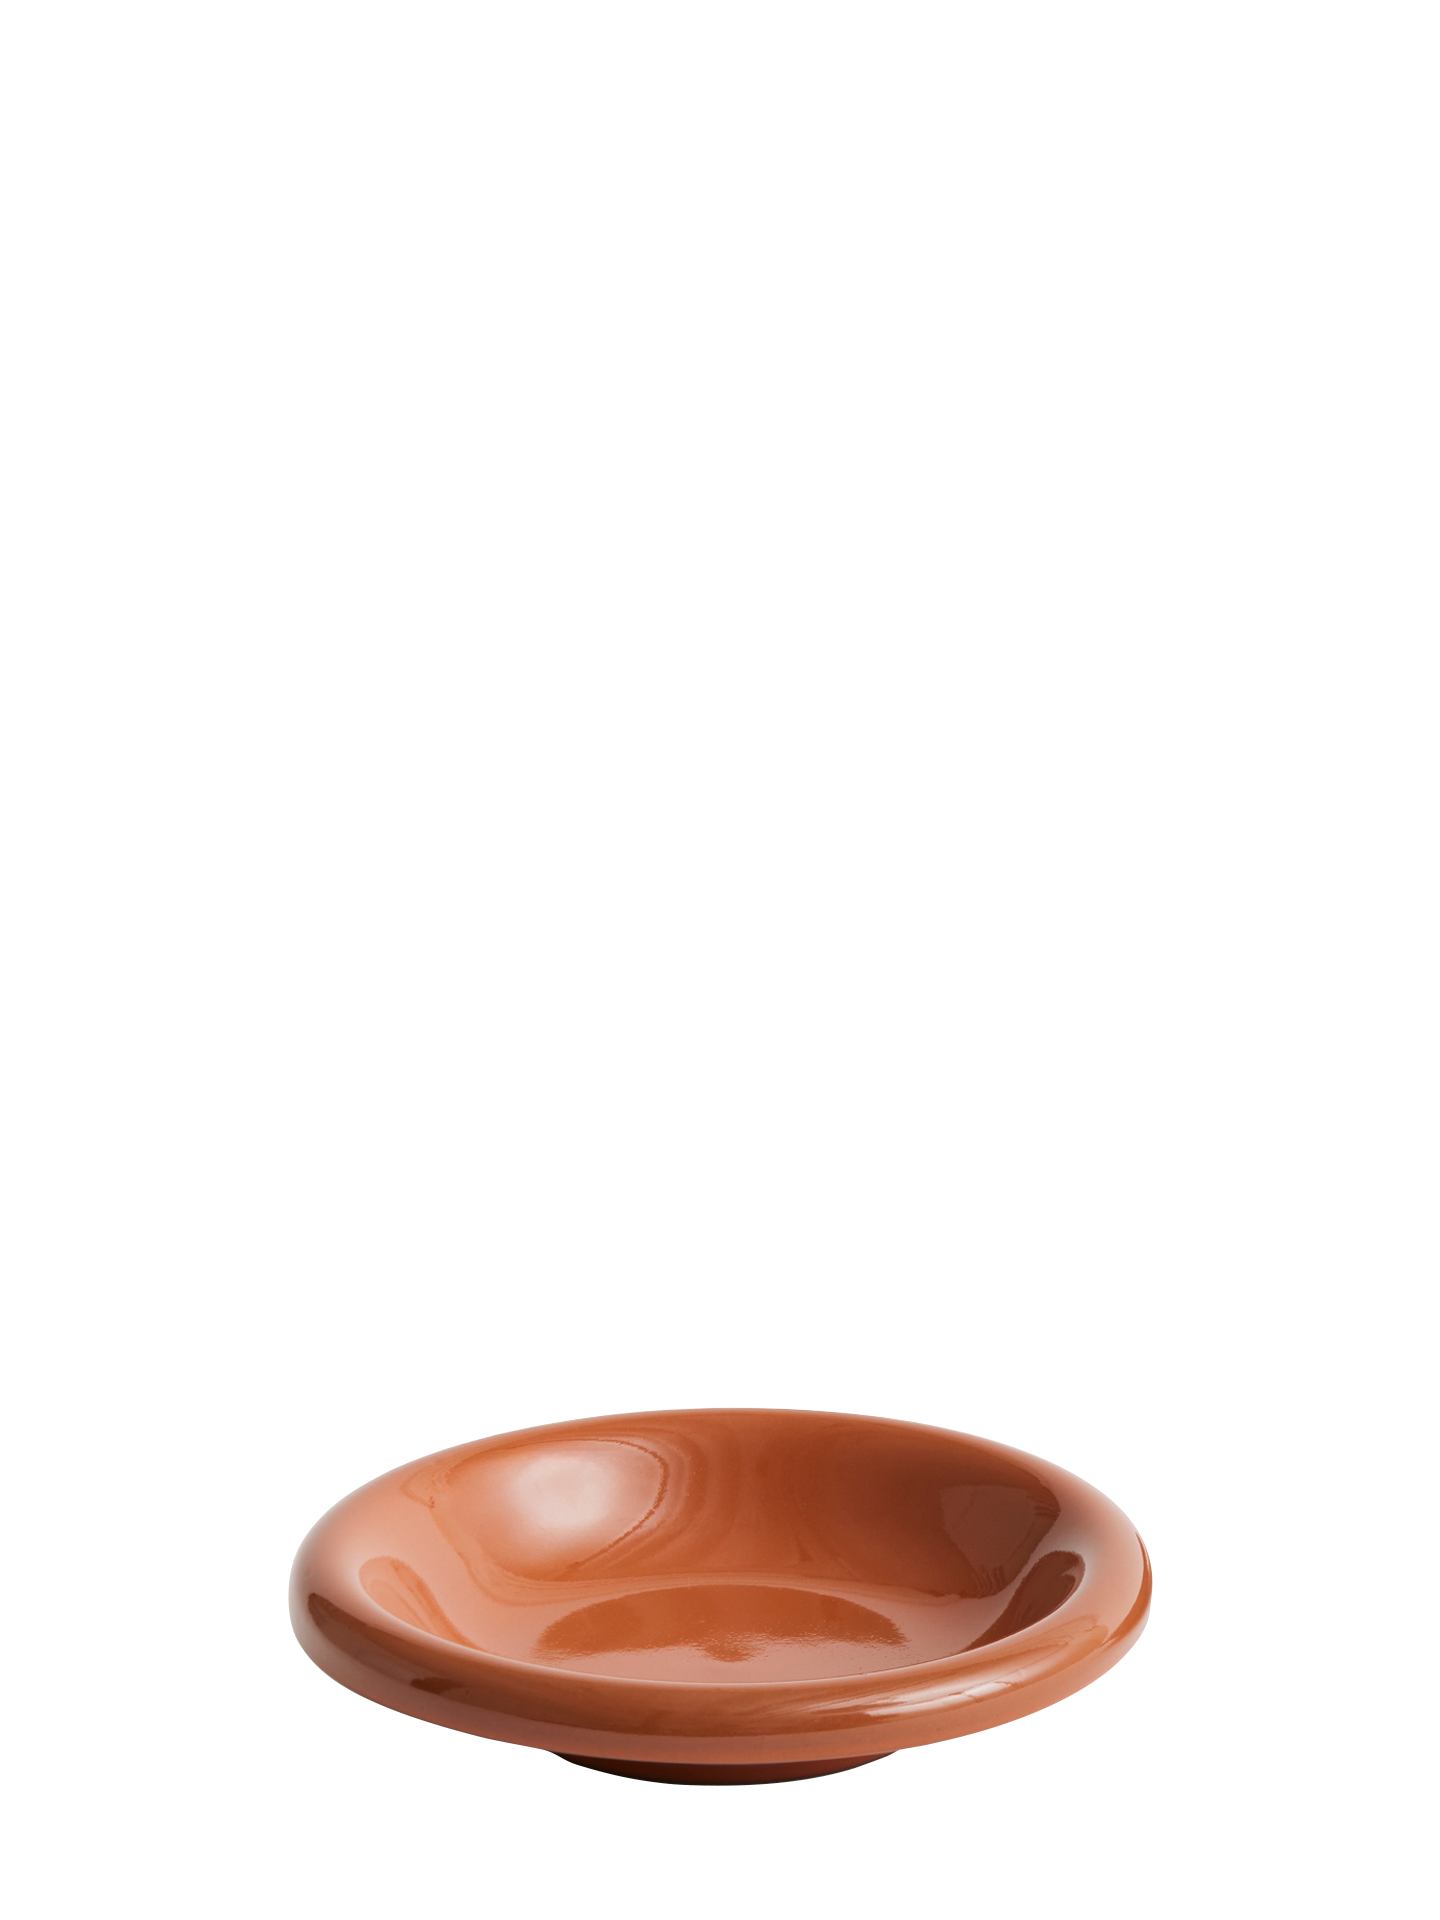 Barro Bowl, Natural Terracotta